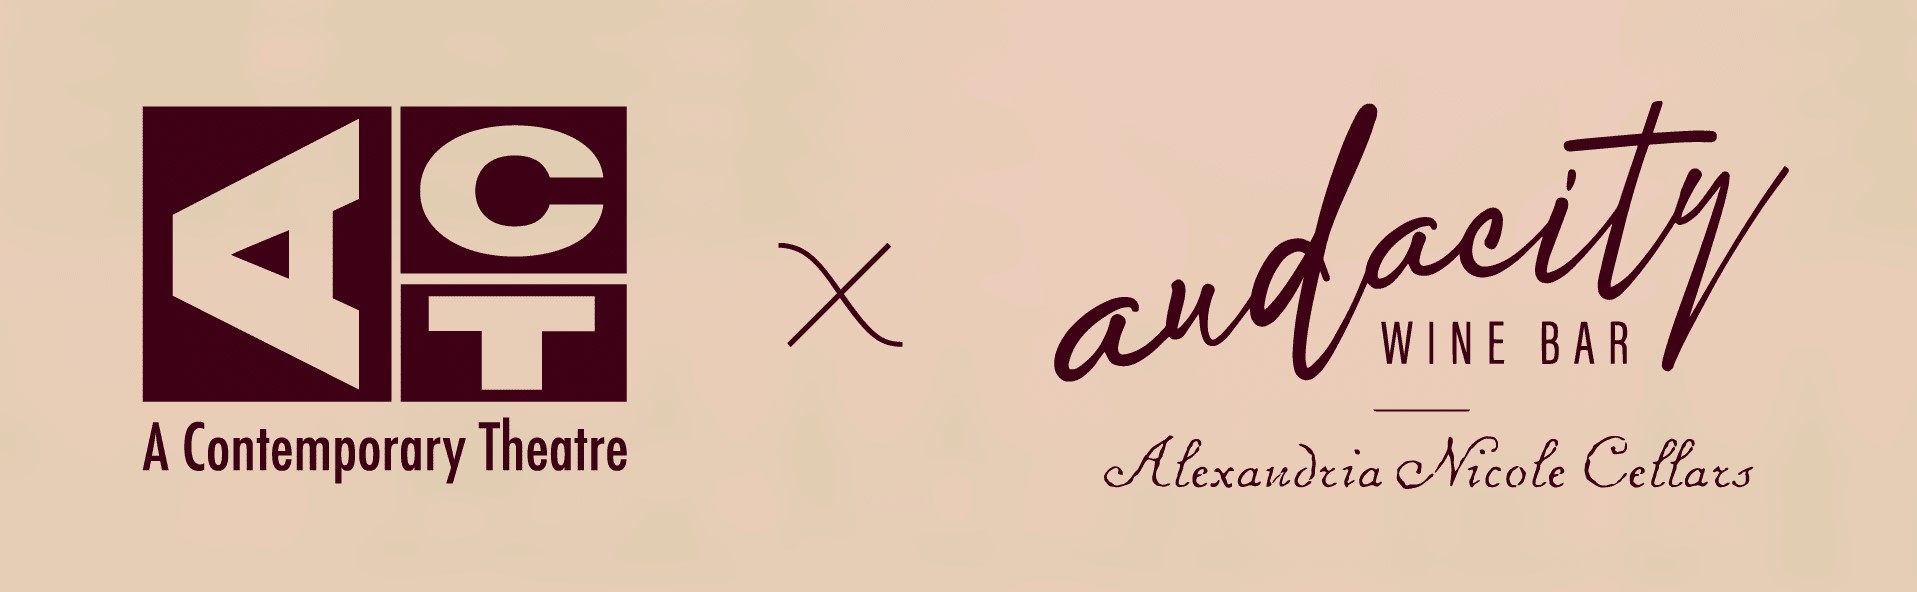 Audacity | Alexandria Nicole Cellars